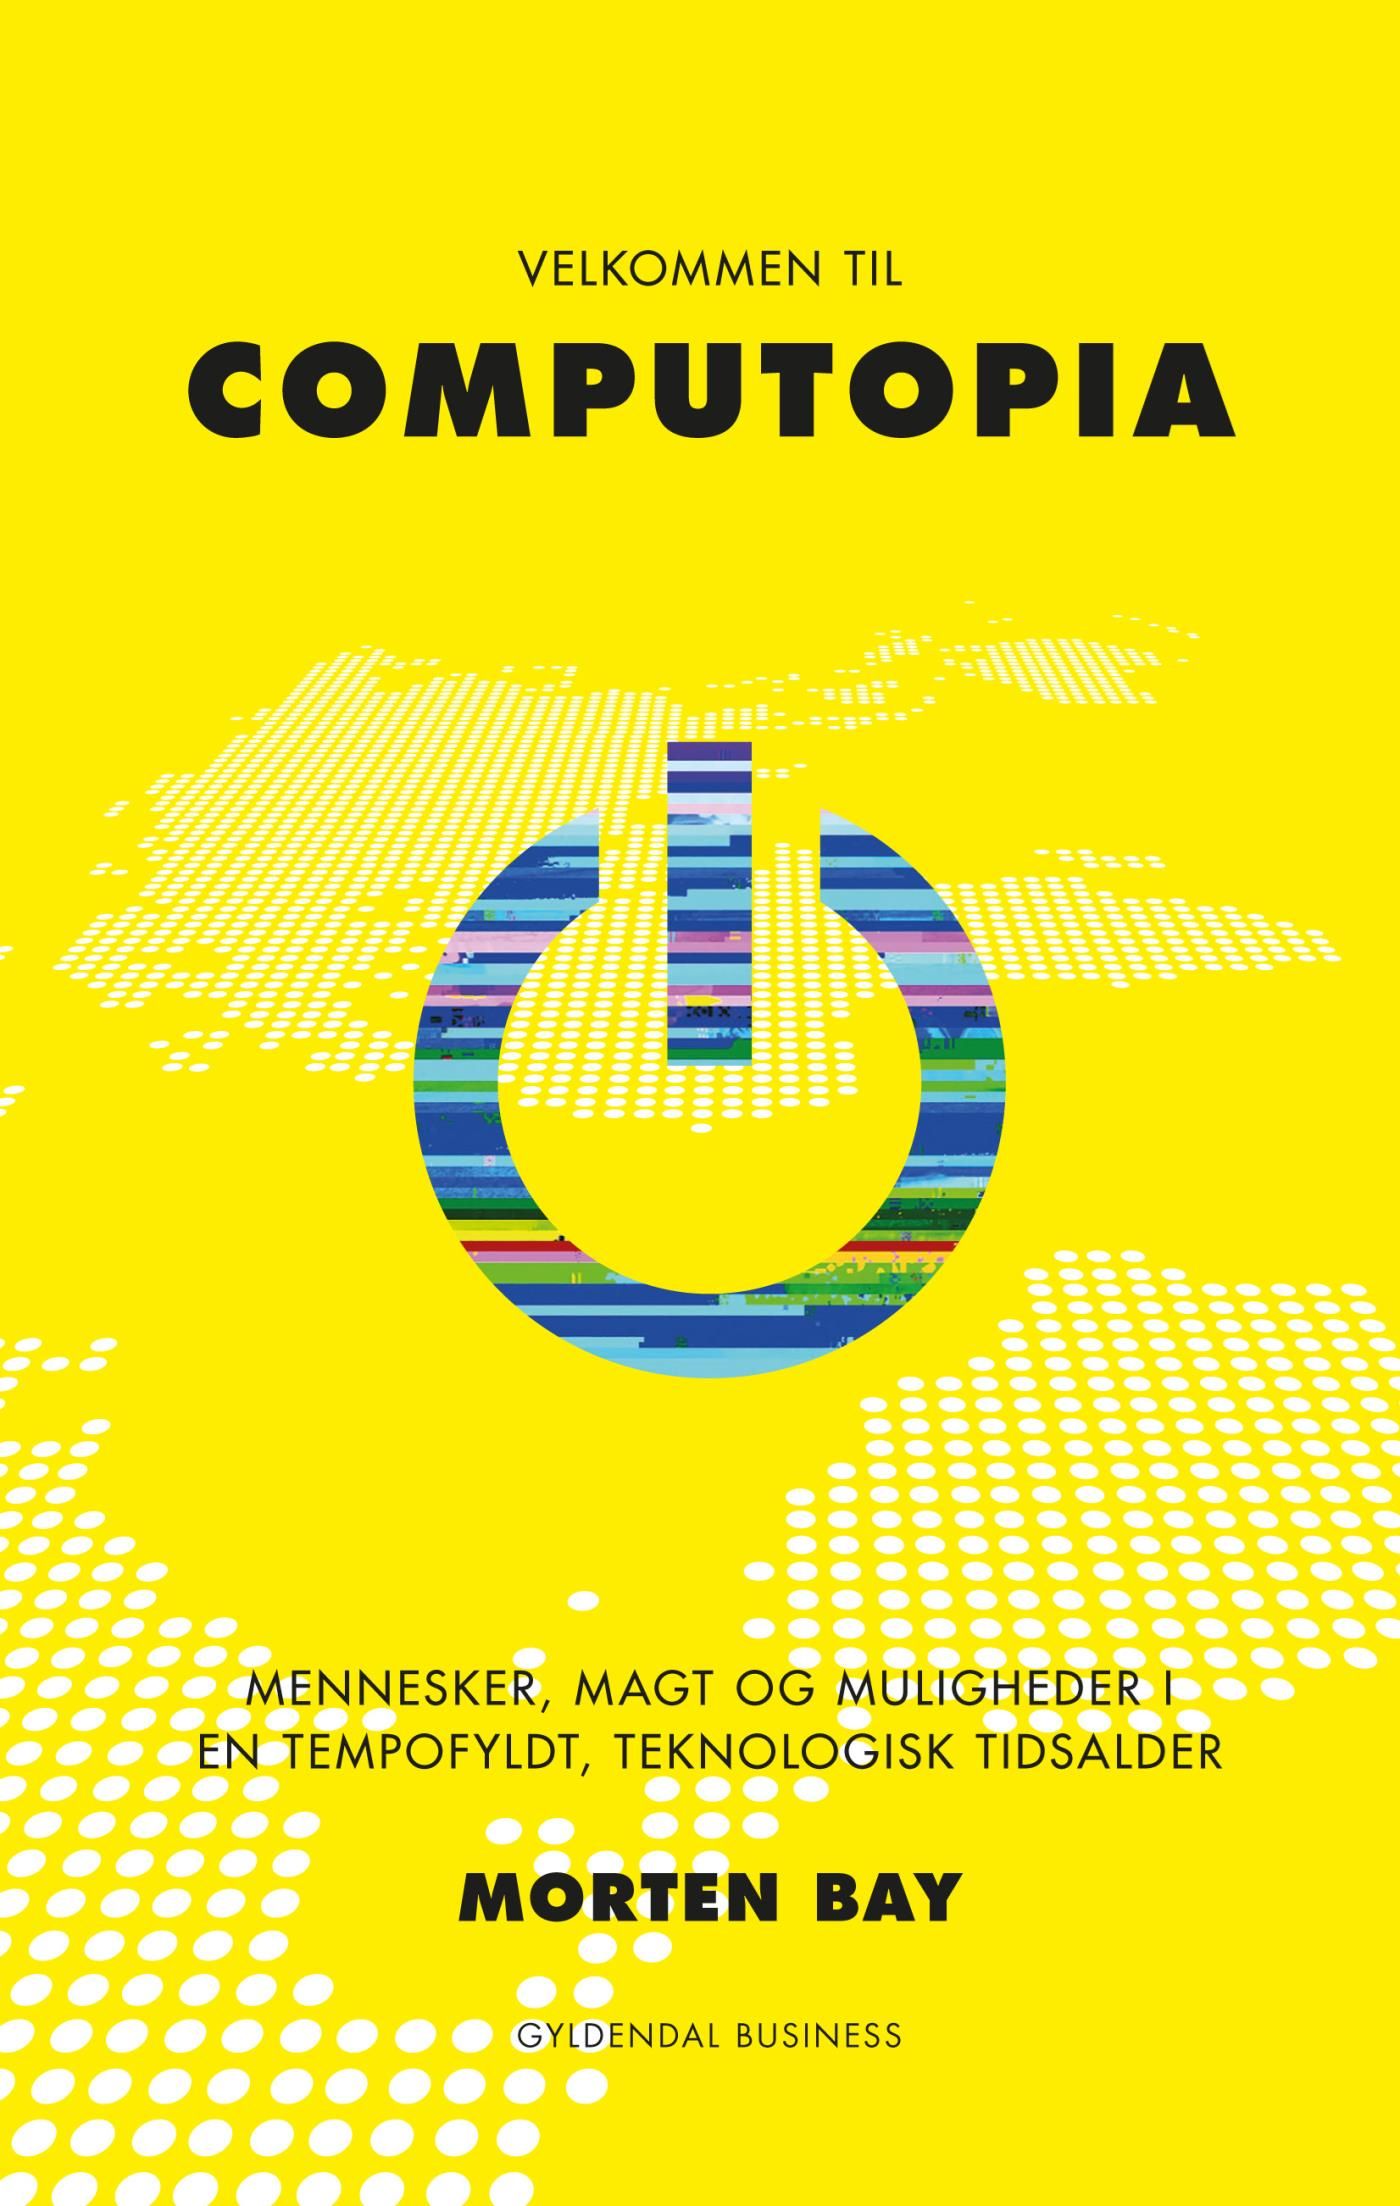 Velkommen til Computopia, eBook by Morten Bay